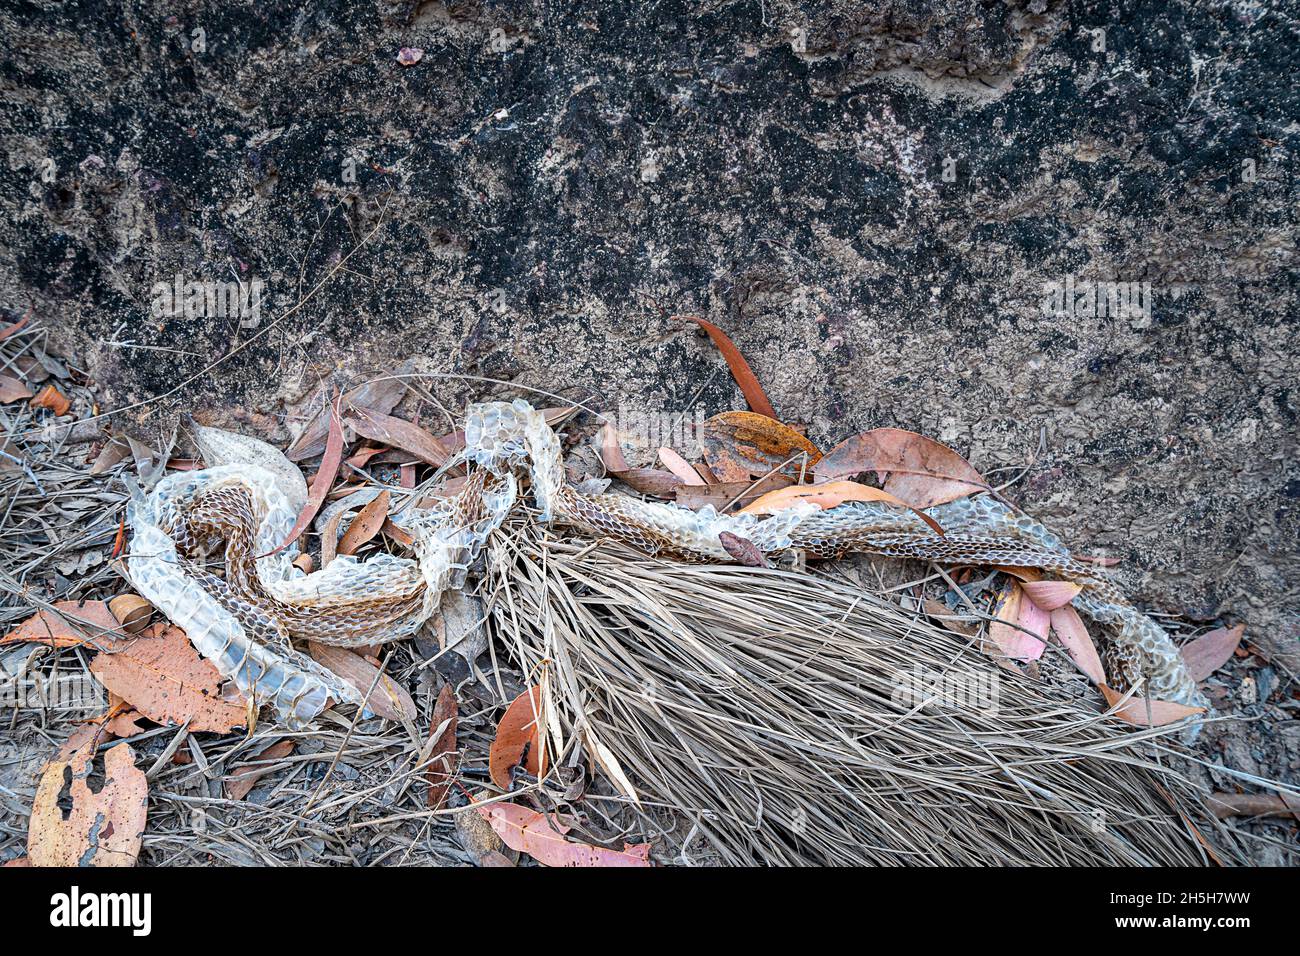 Shed snake skin on ground Stock Photo